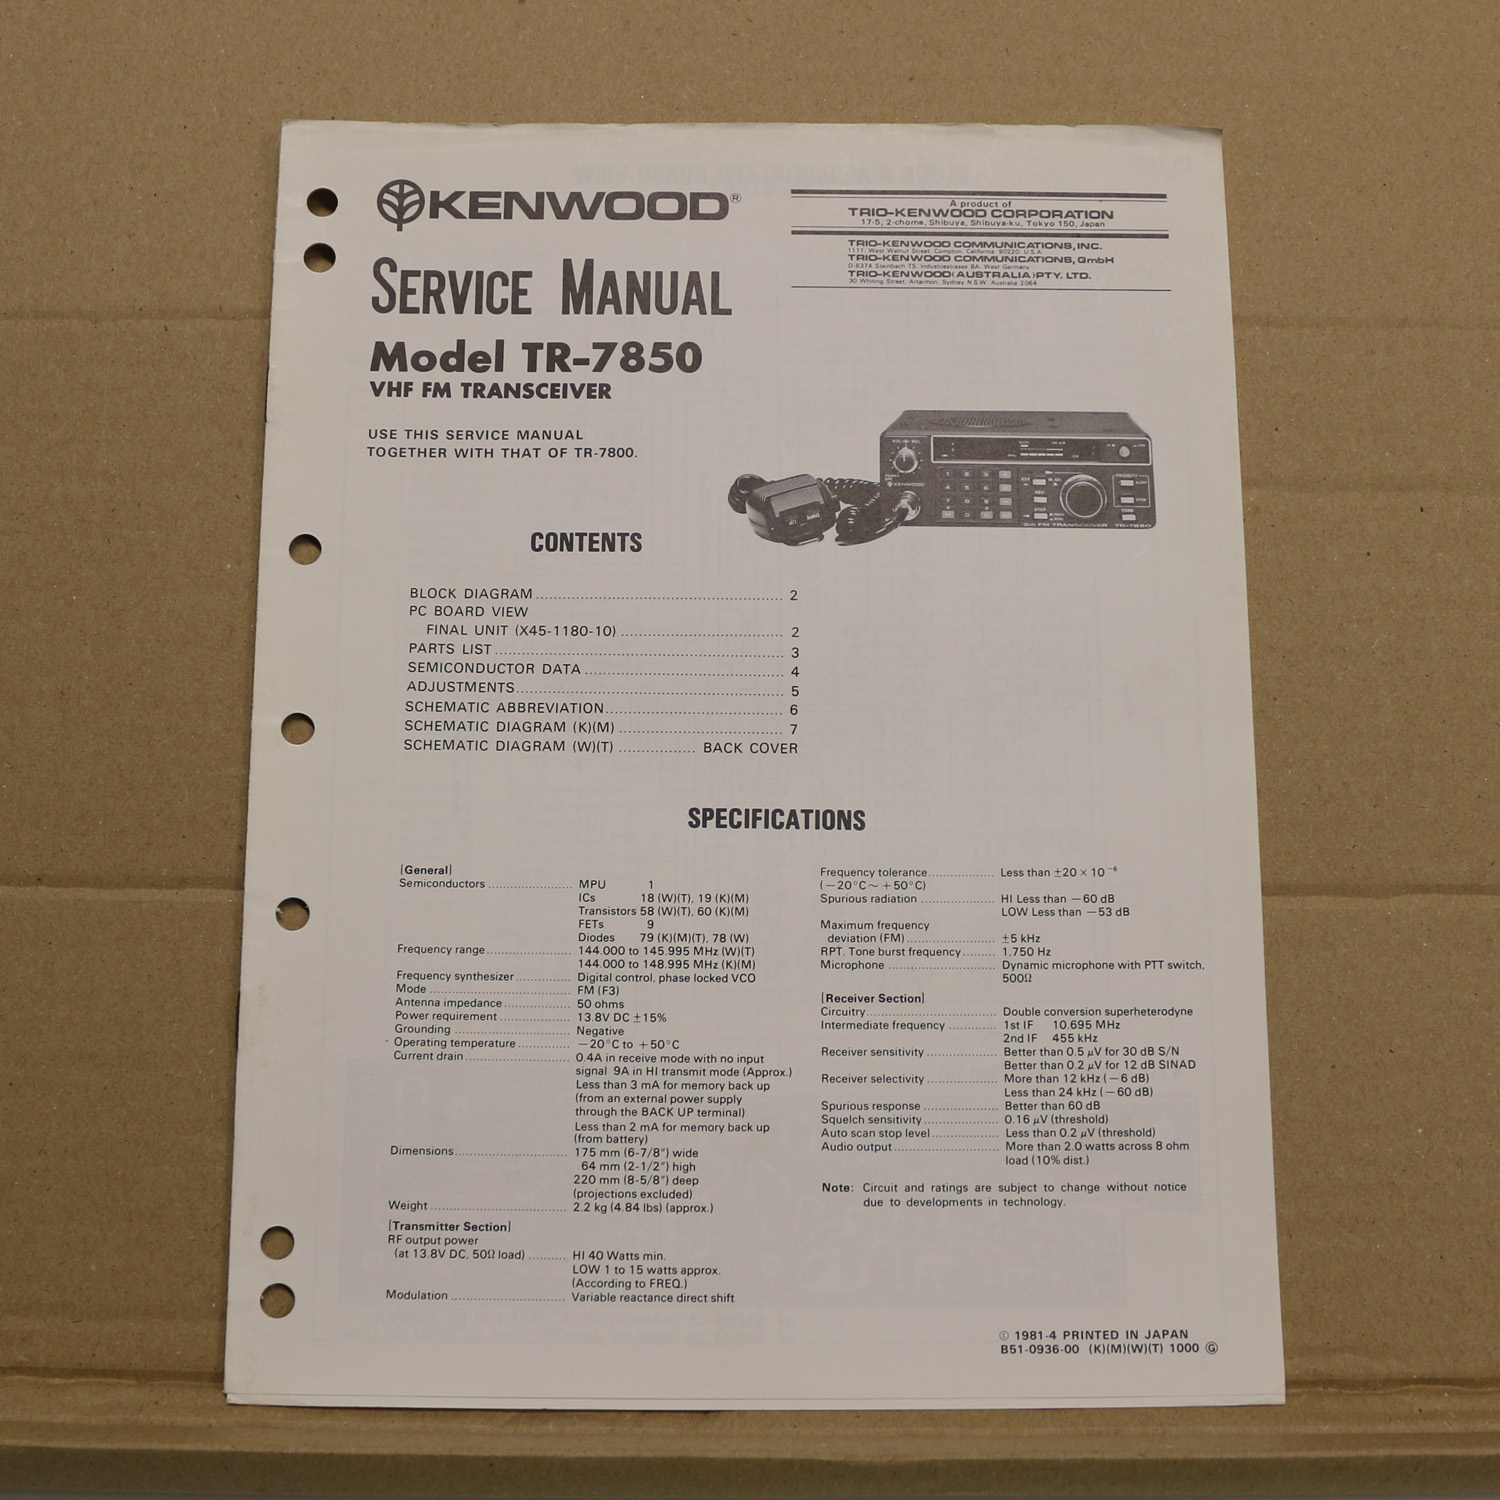 Kenwood TR-7850 Service Manual